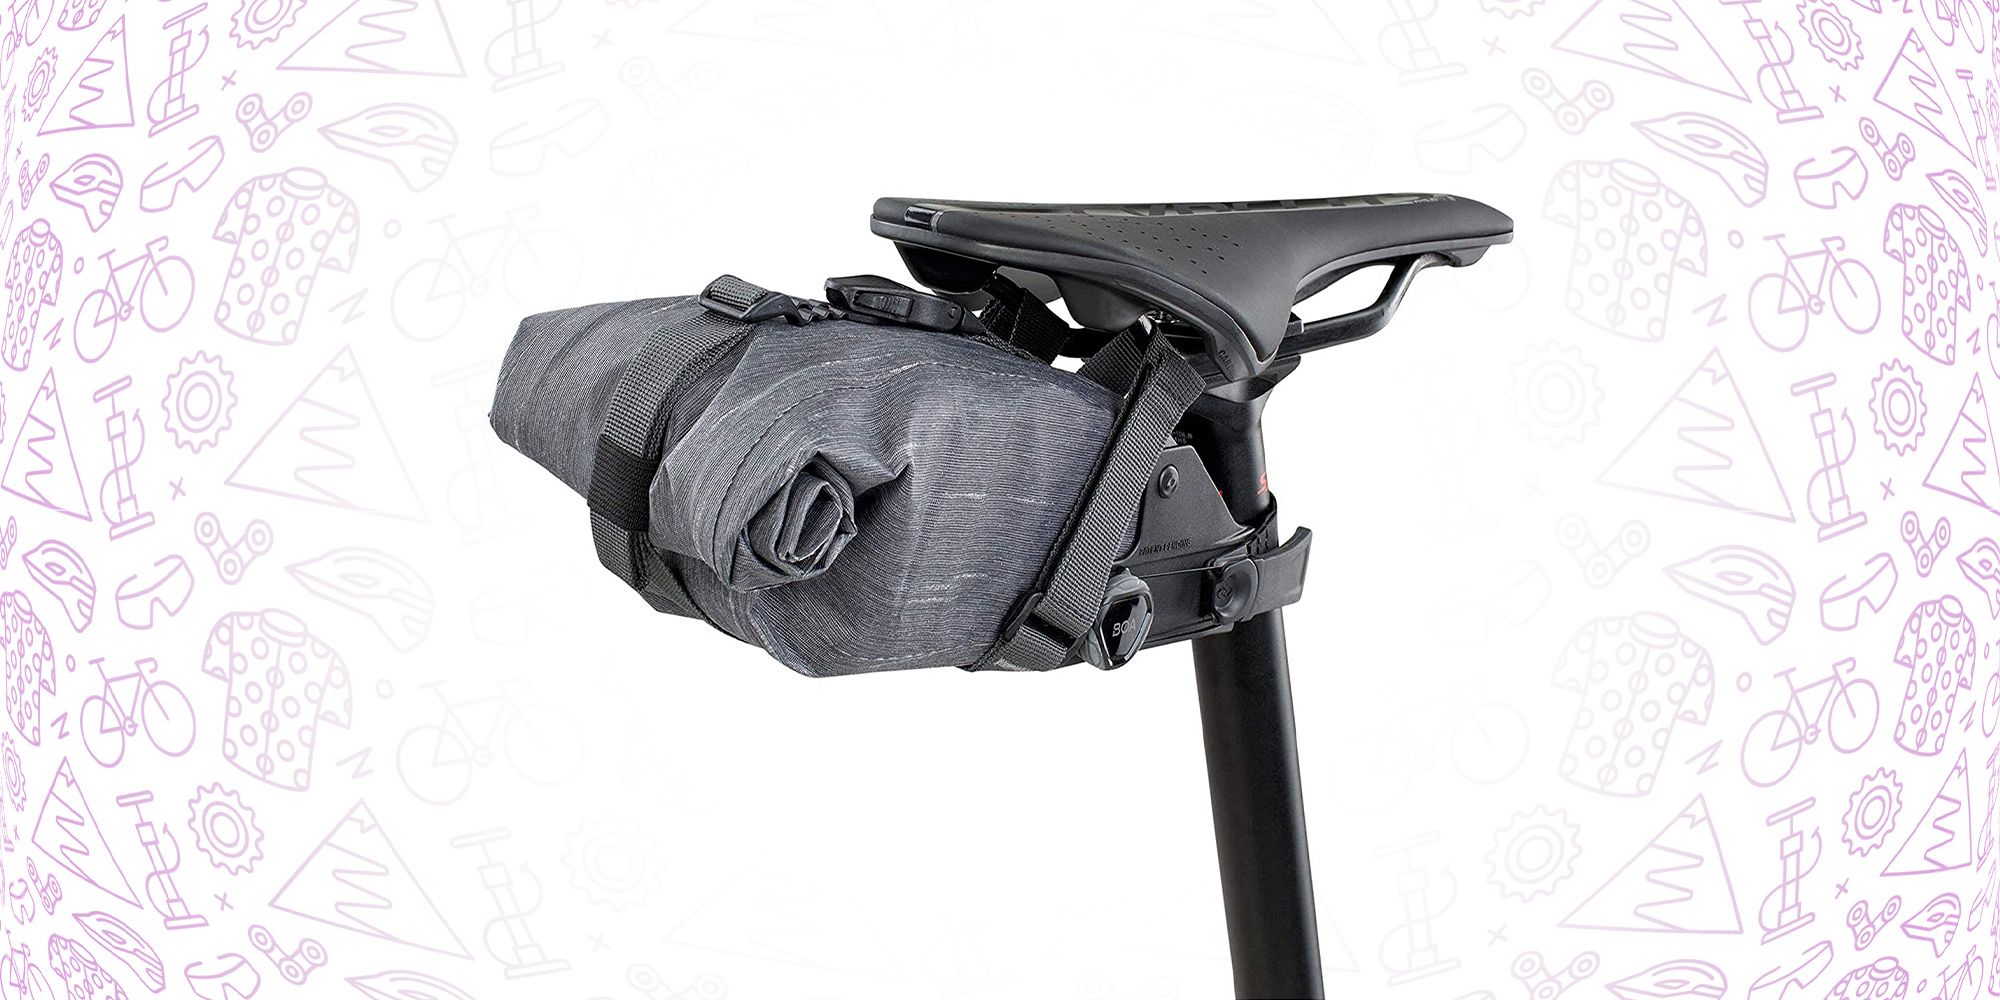 VKYSINKO Ultralight Bike Saddle Bag Bicycle Seat Bag Waterproof Reflective Material Multi-Layer Storage for Road Bike 